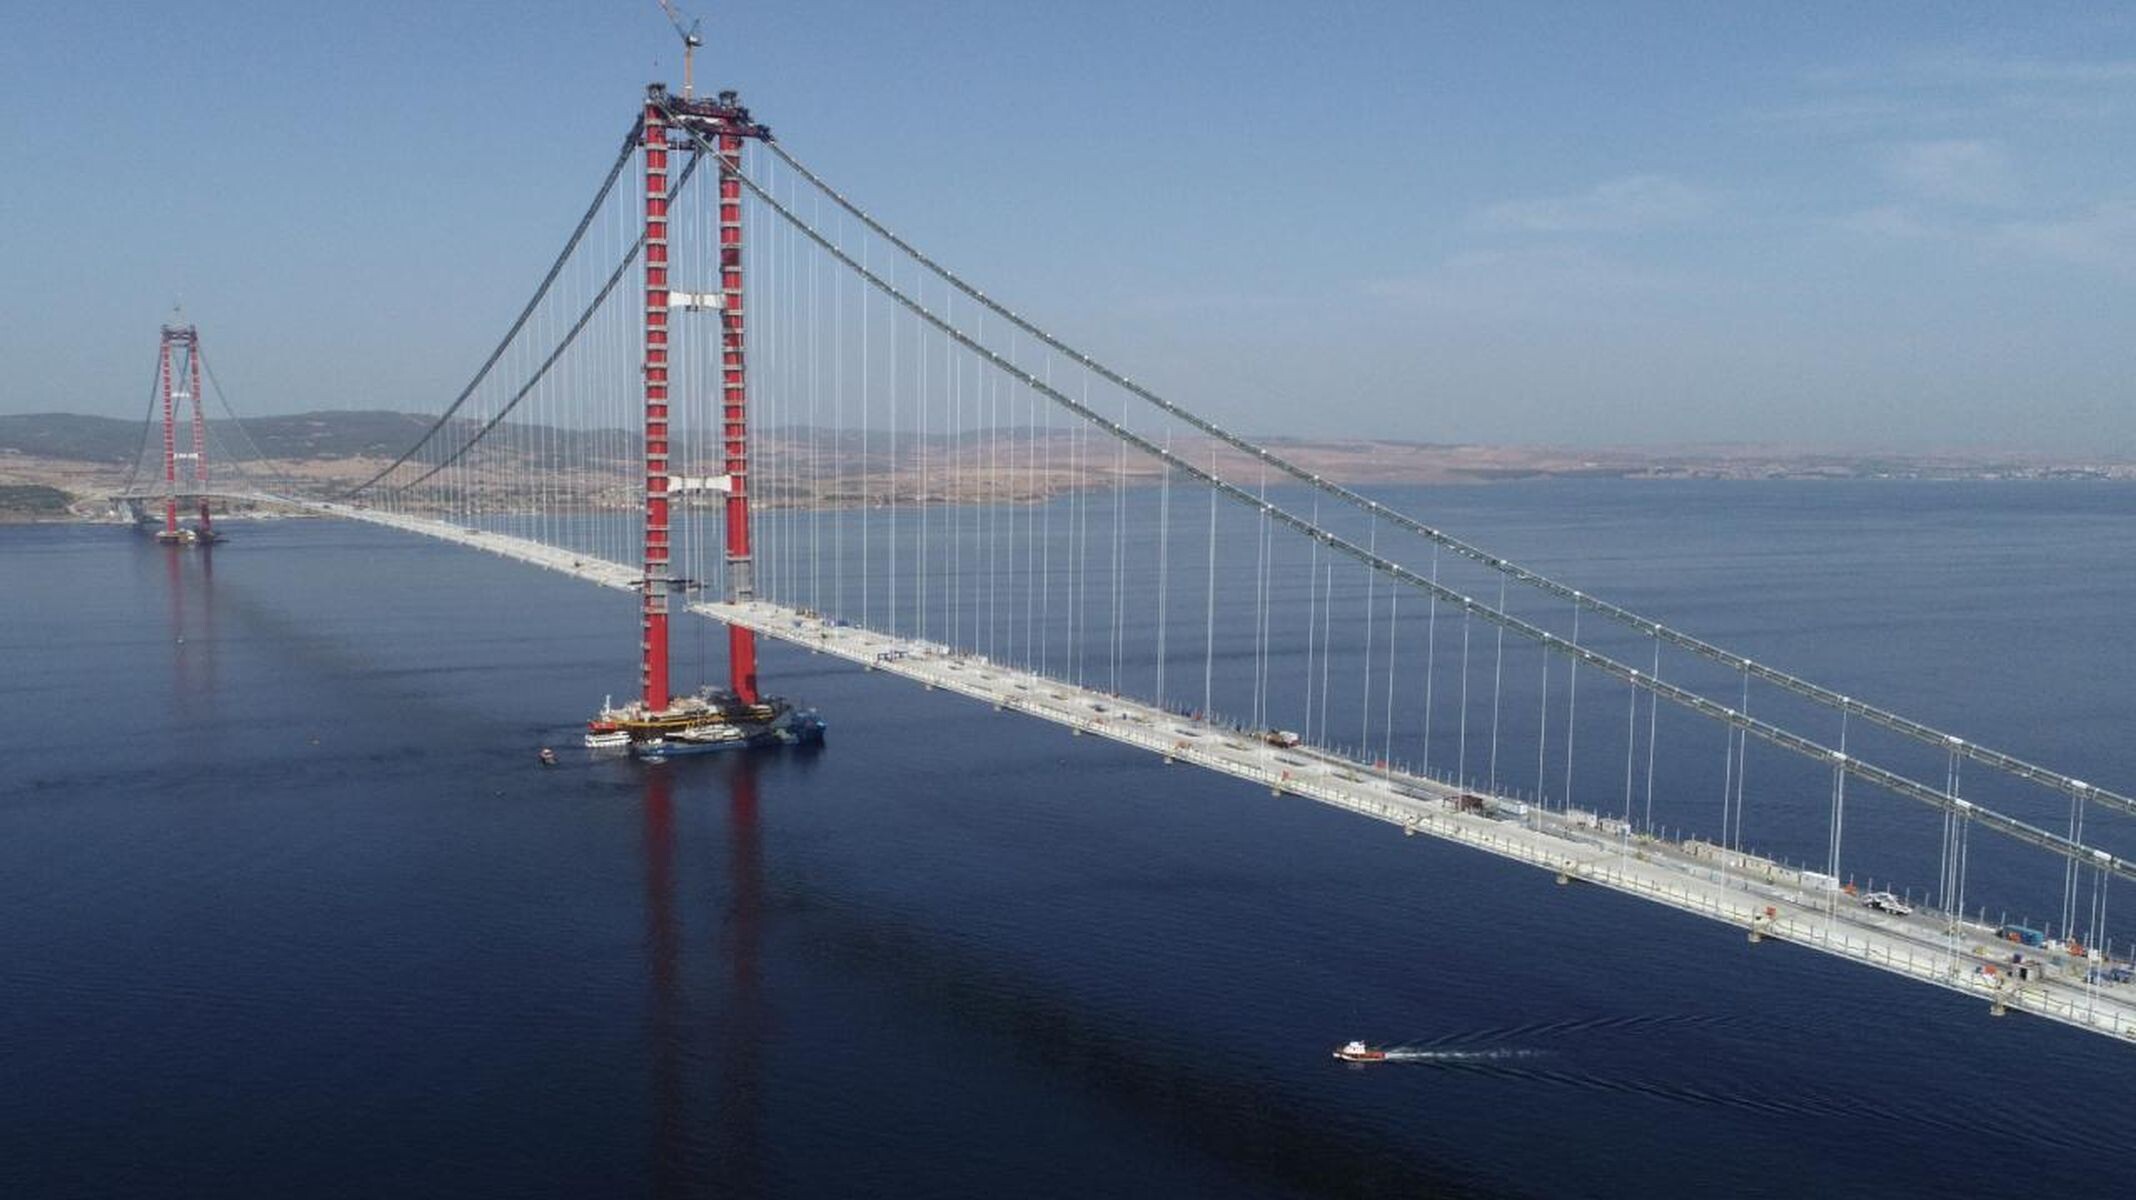 More information about "Εγκαινιάστηκε η γέφυρα Canakkale 1915 η μεγαλύτερη κρεμαστή γέφυρα στον κόσμο μήκους 4.608 χλμ."